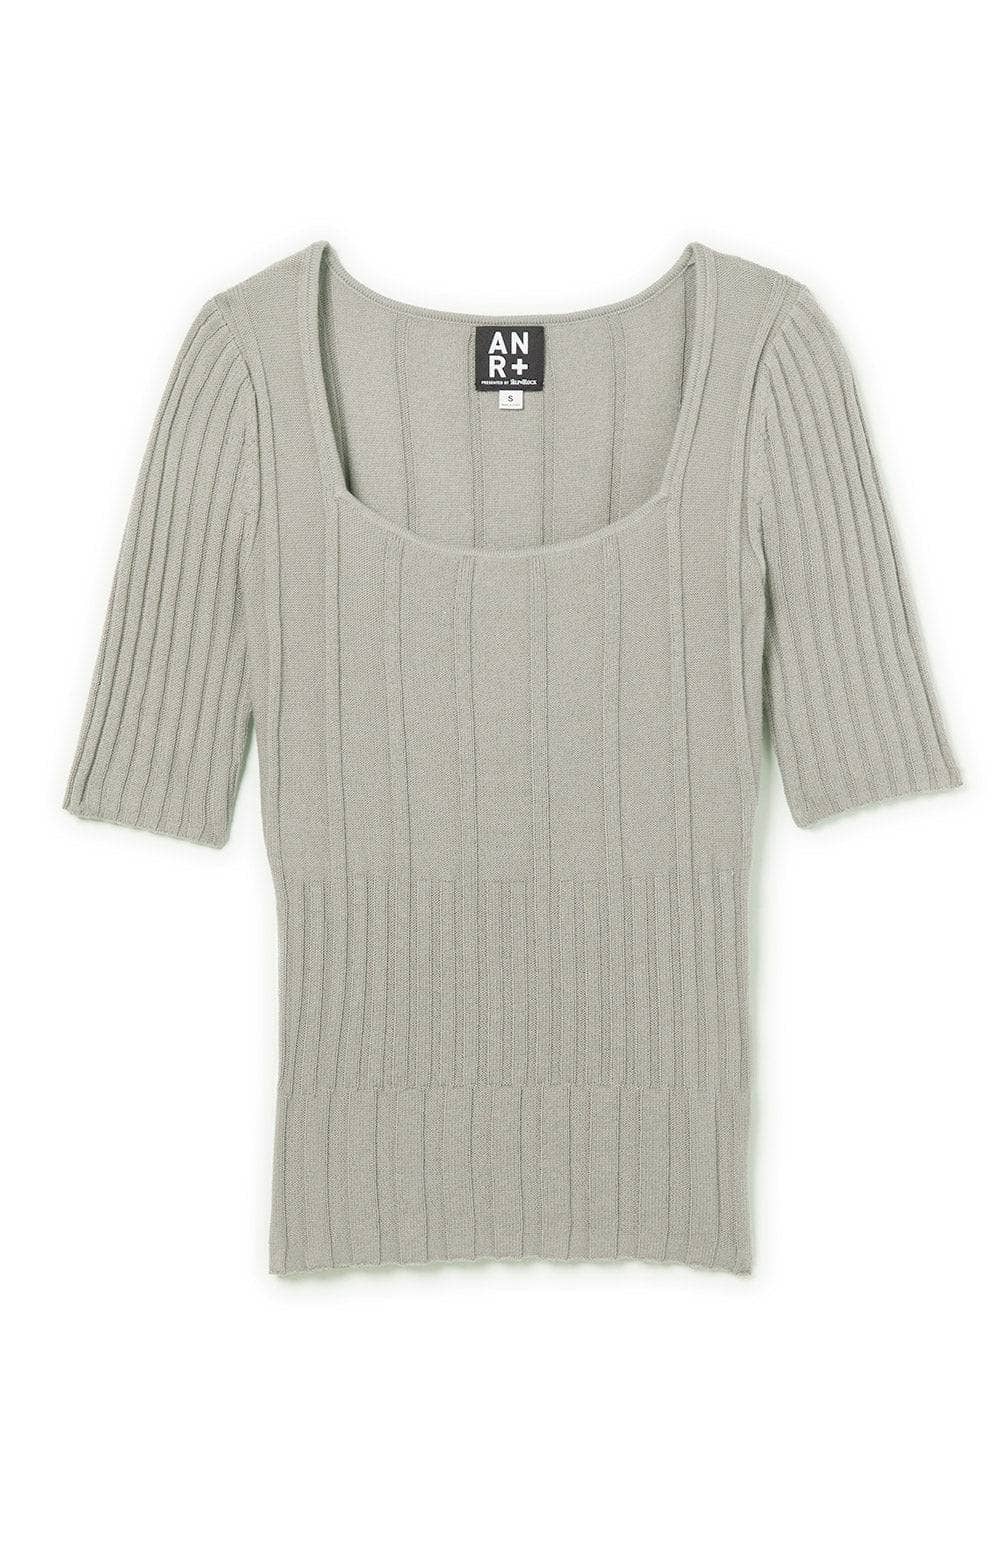 ANR Womens Sweater Jenna Squareneck Sweater | Celadon